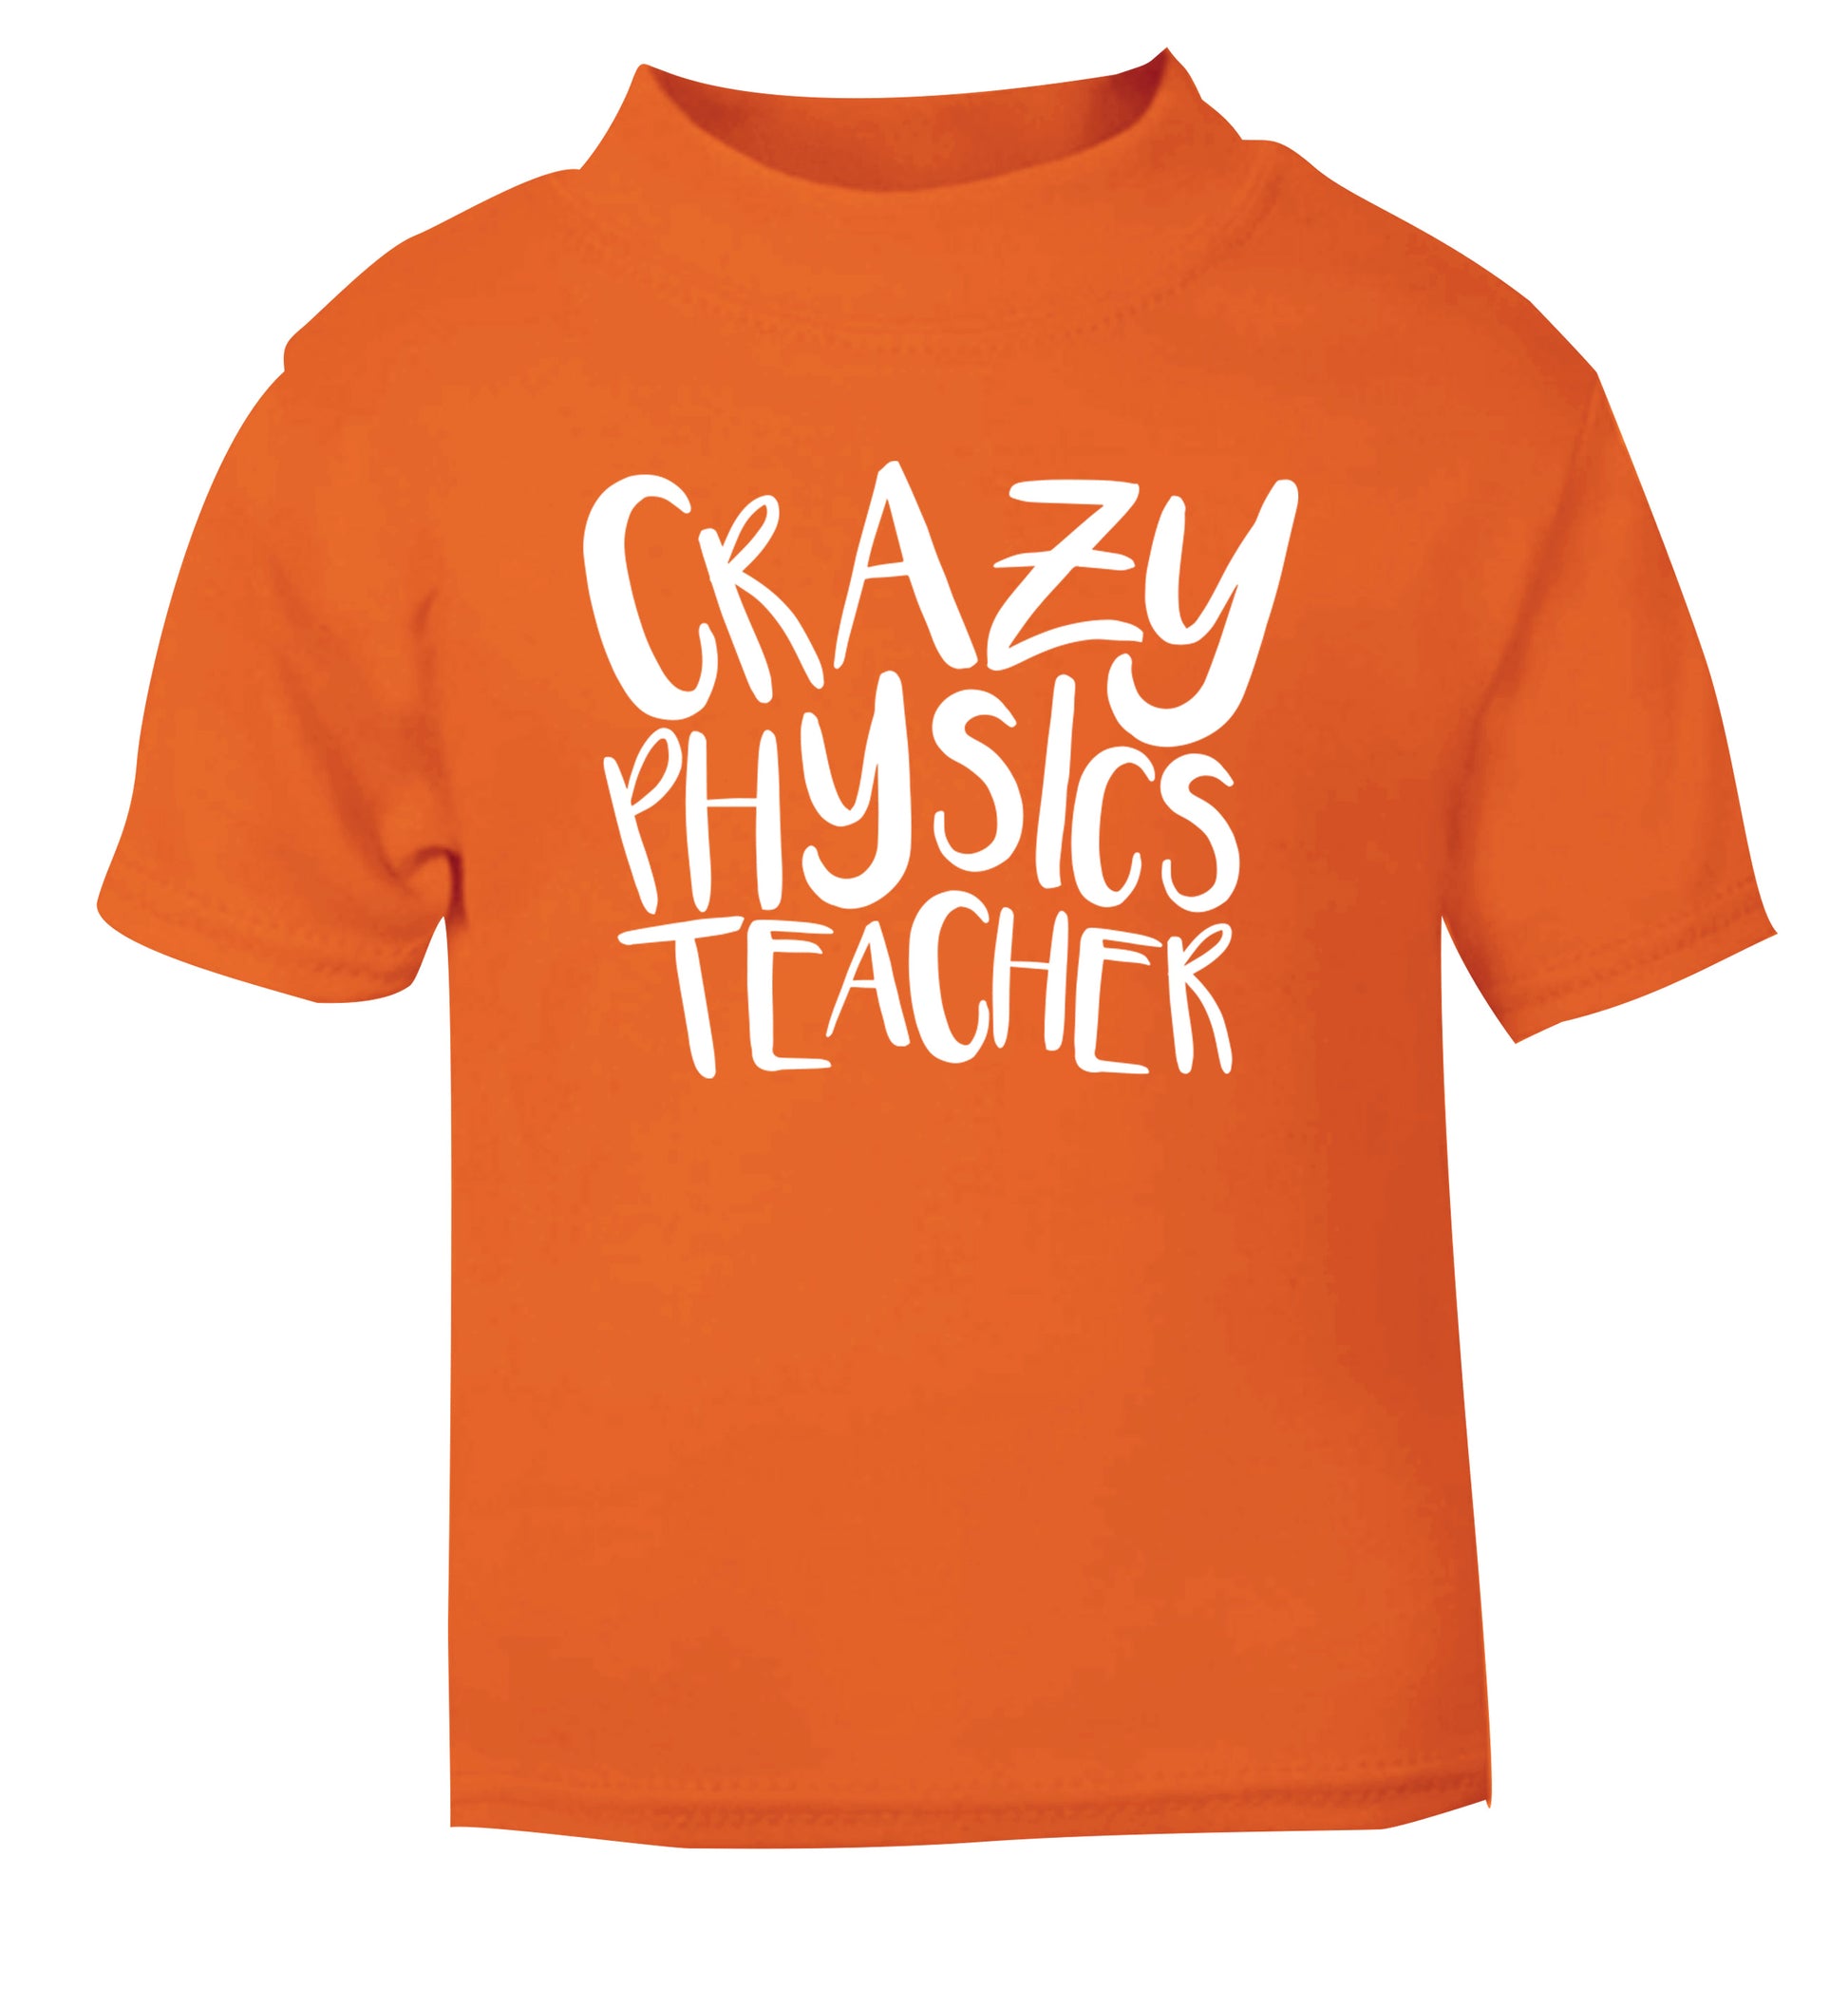 Crazy physics teacher orange Baby Toddler Tshirt 2 Years